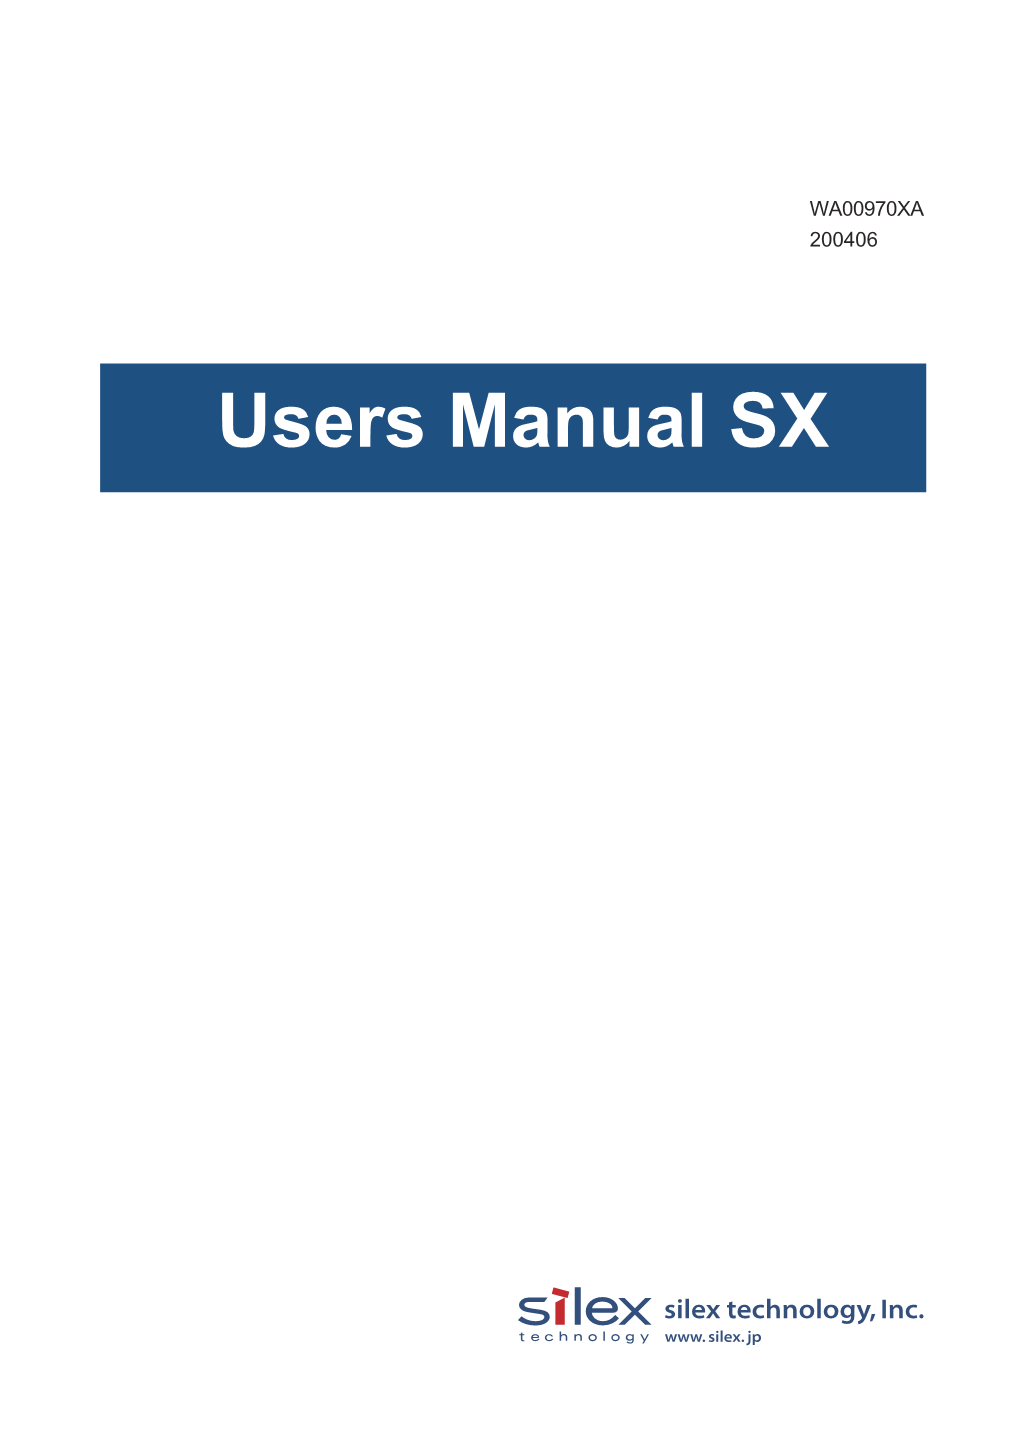 Users Manual SX Users Manual SX